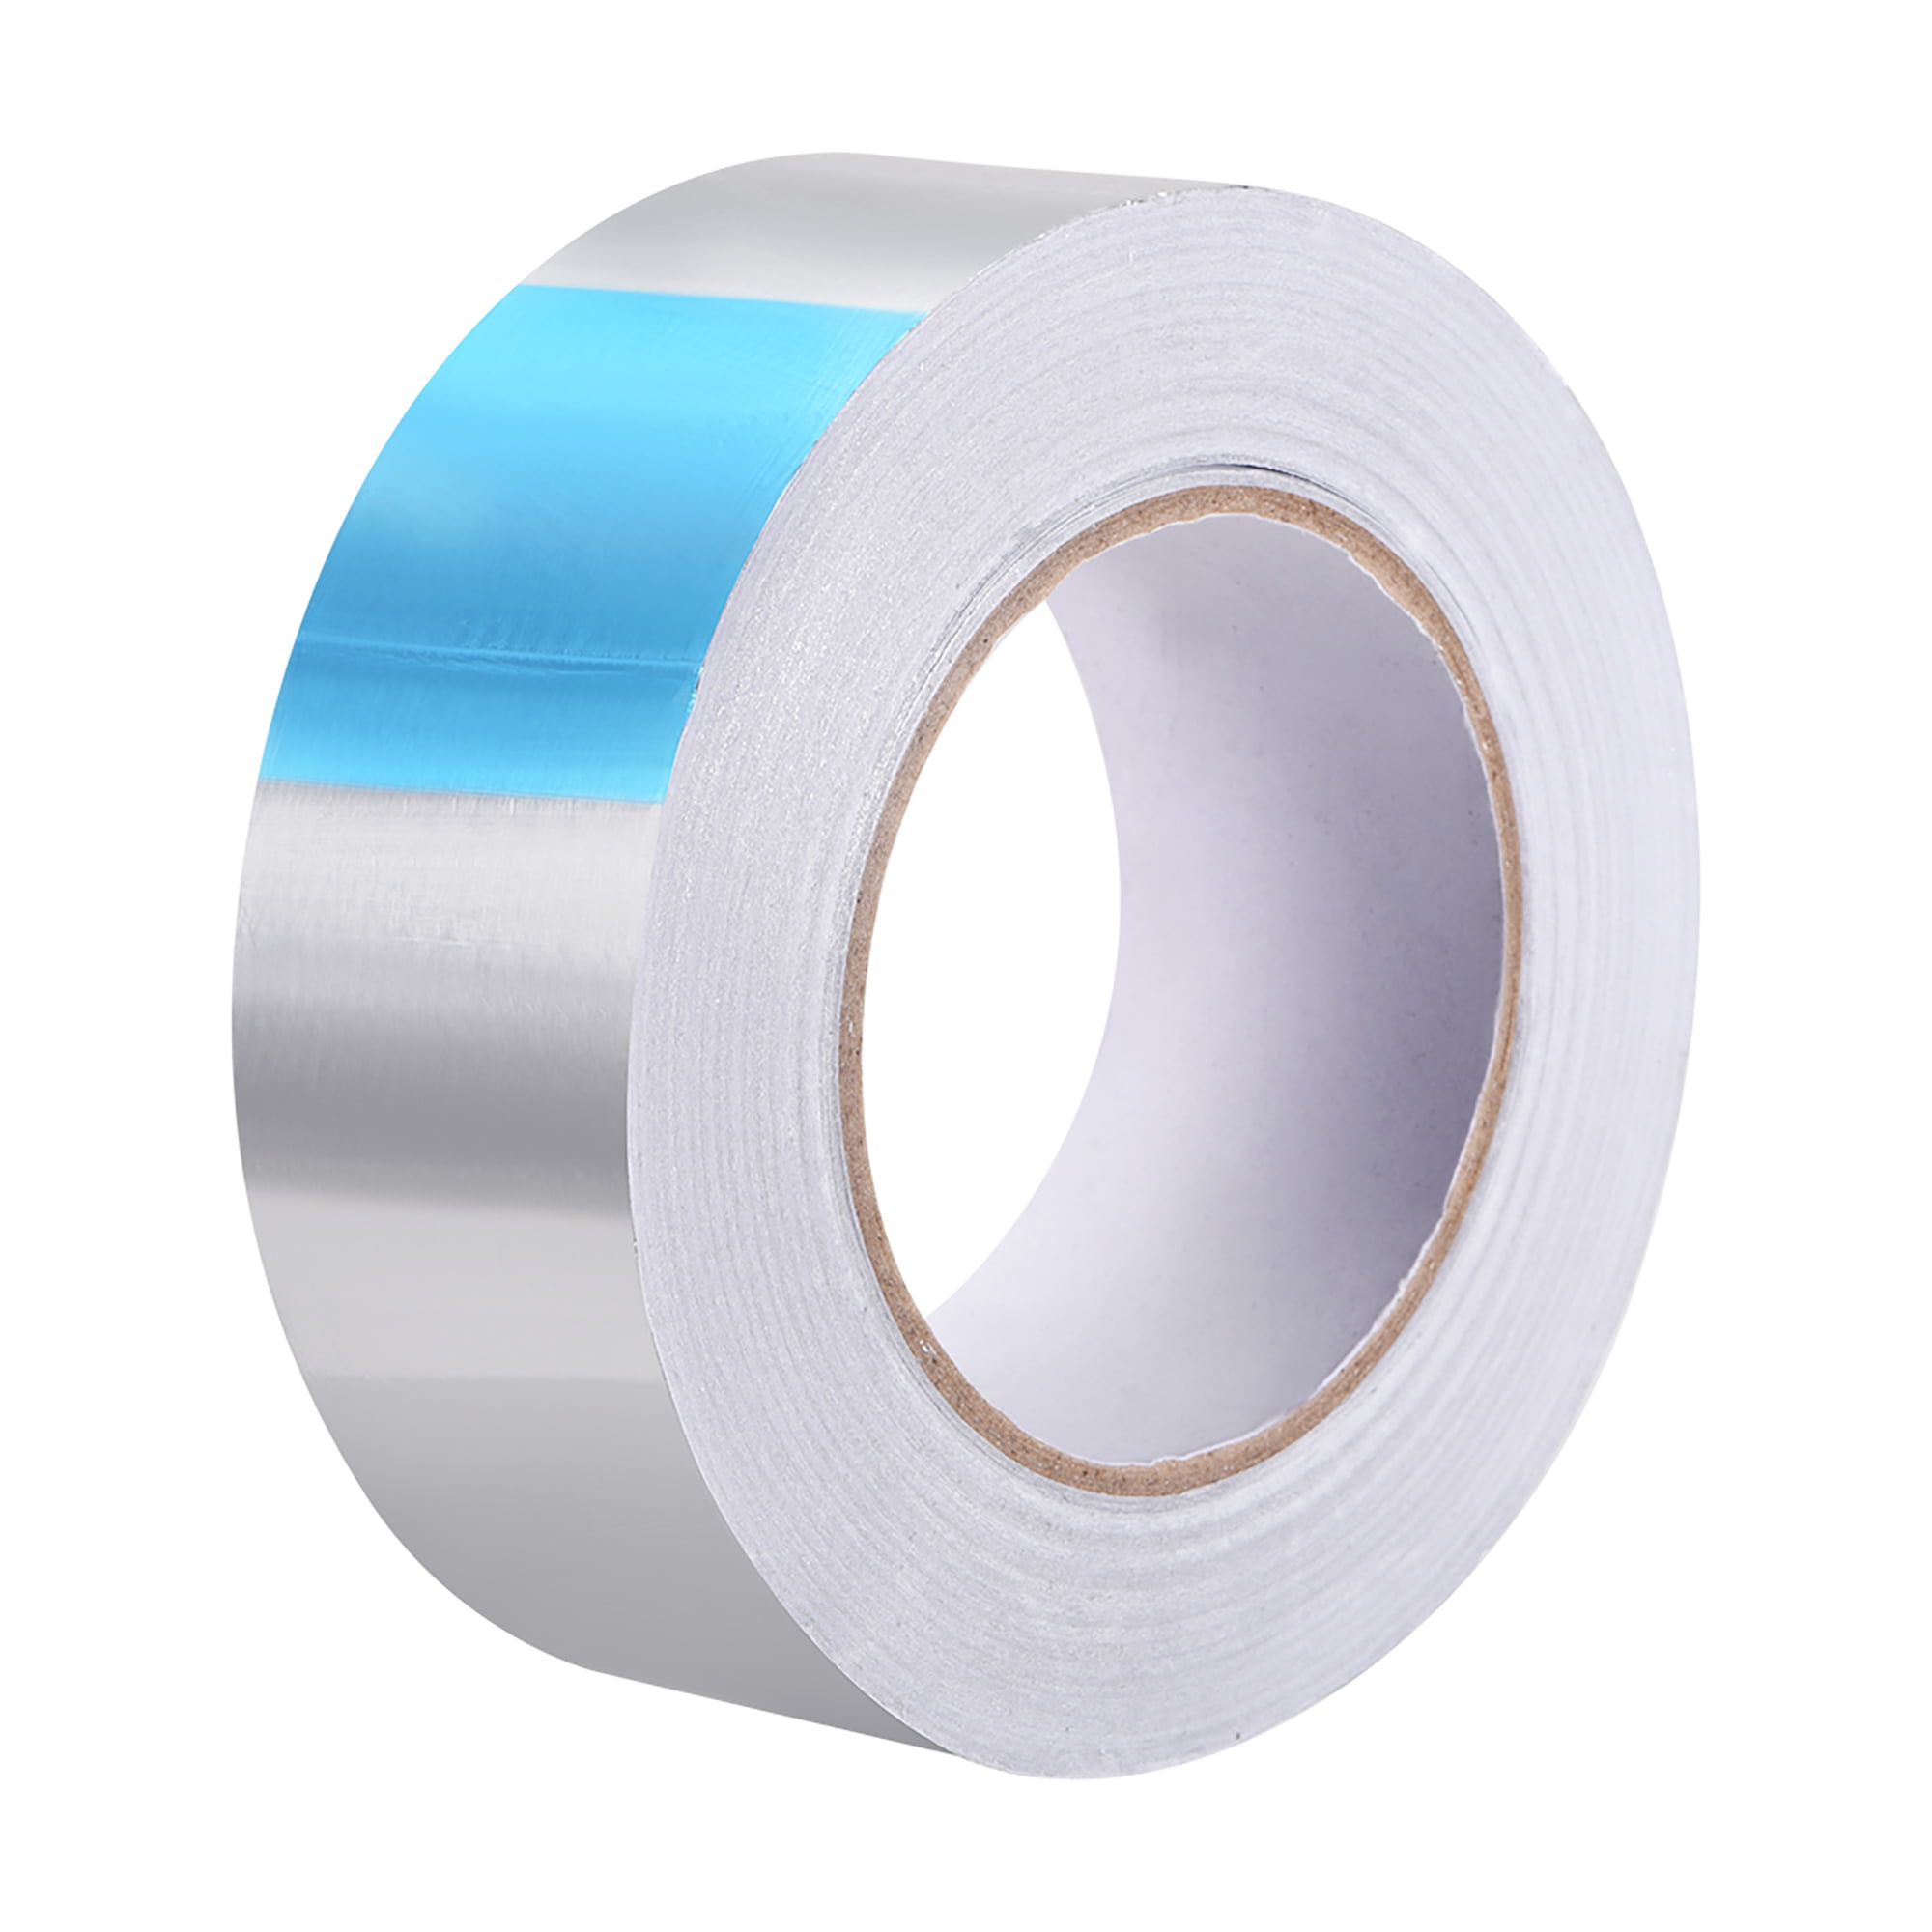 Heat Resistant Tape Aluminum Foil Adhesive Tape 50mm x 50m(164ft)